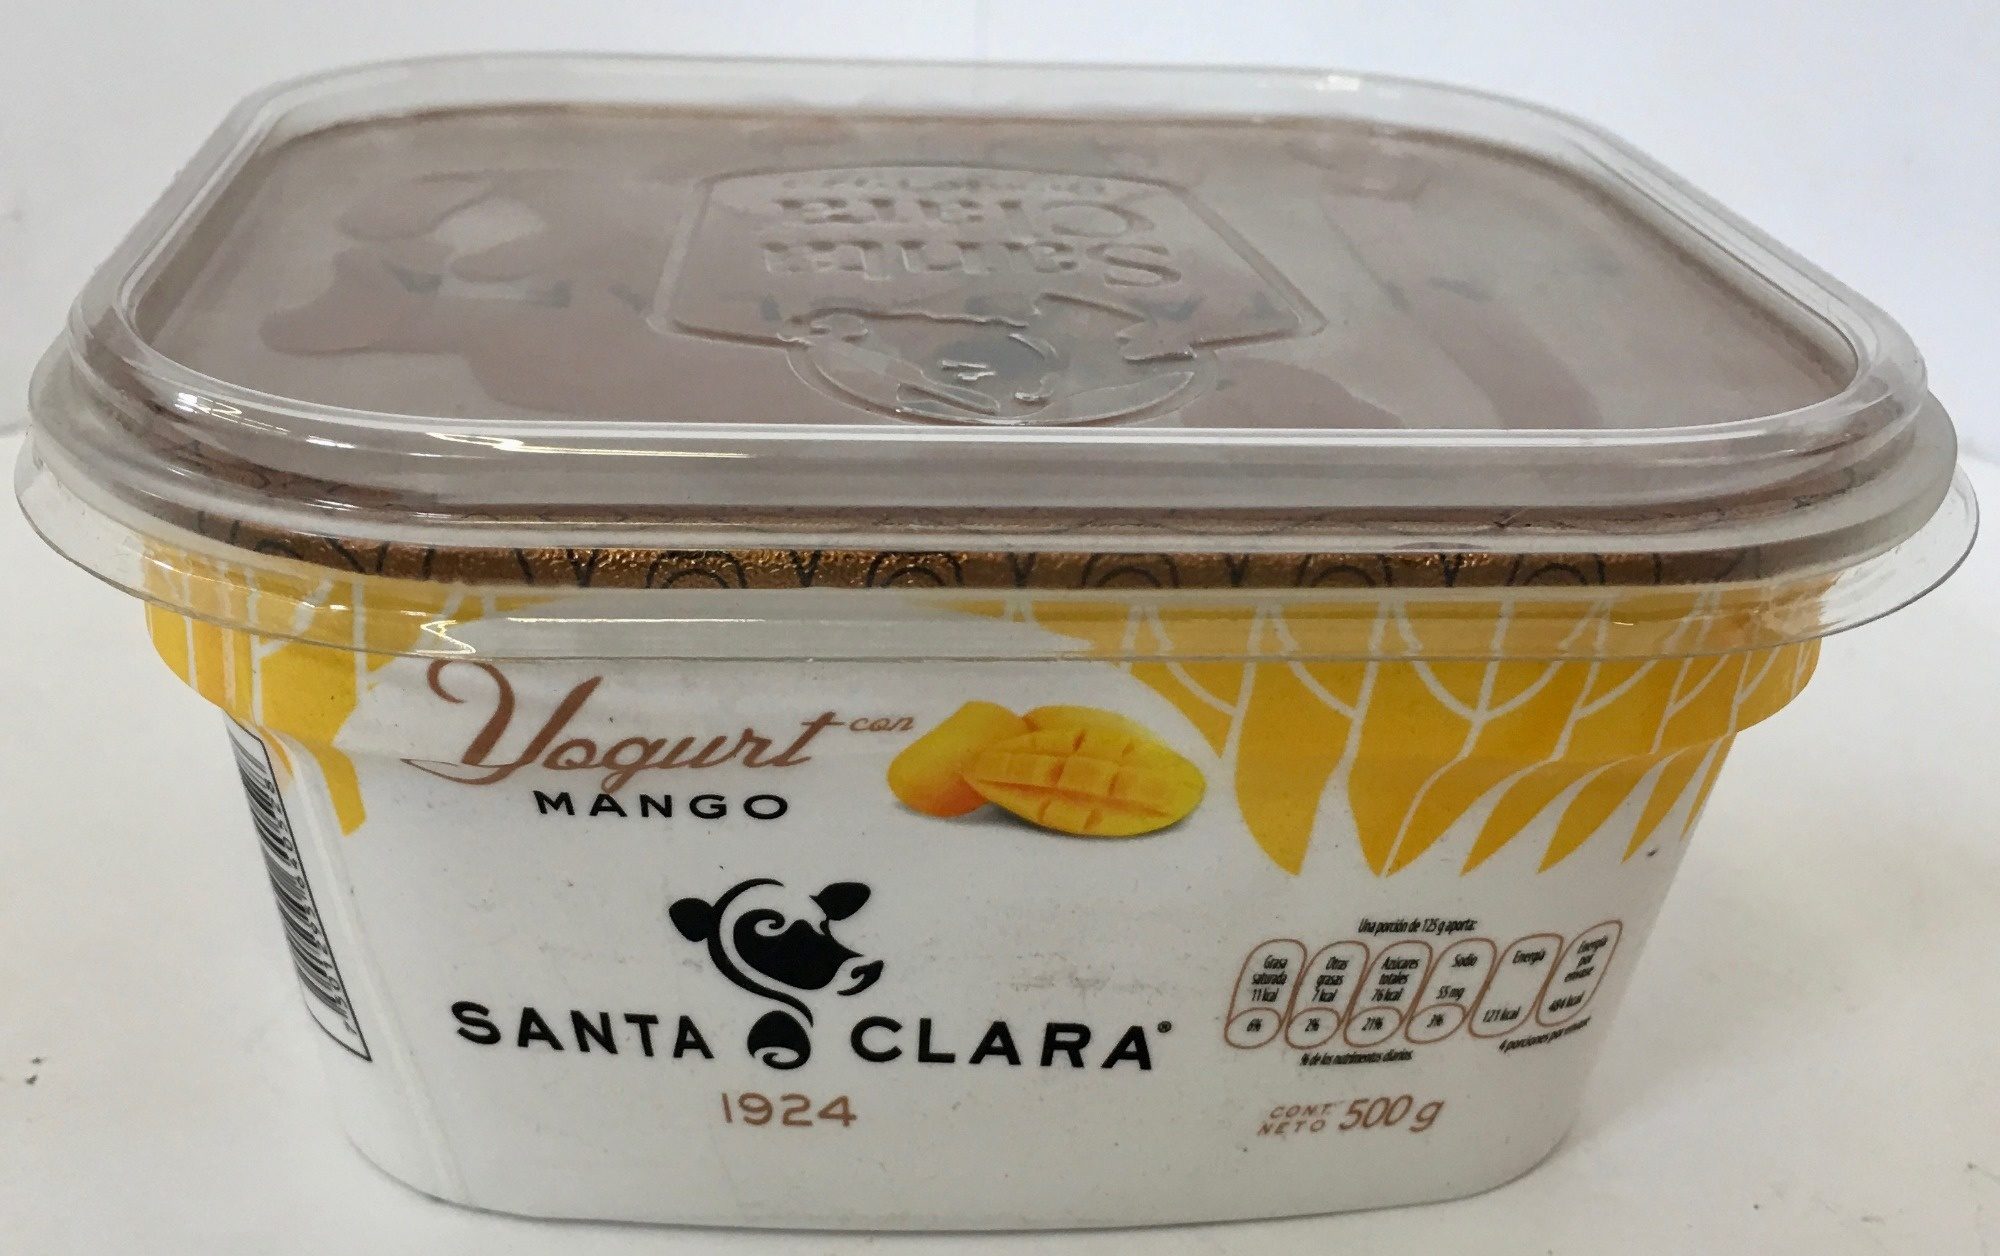 Santa Clara yogurt Mango - Producto